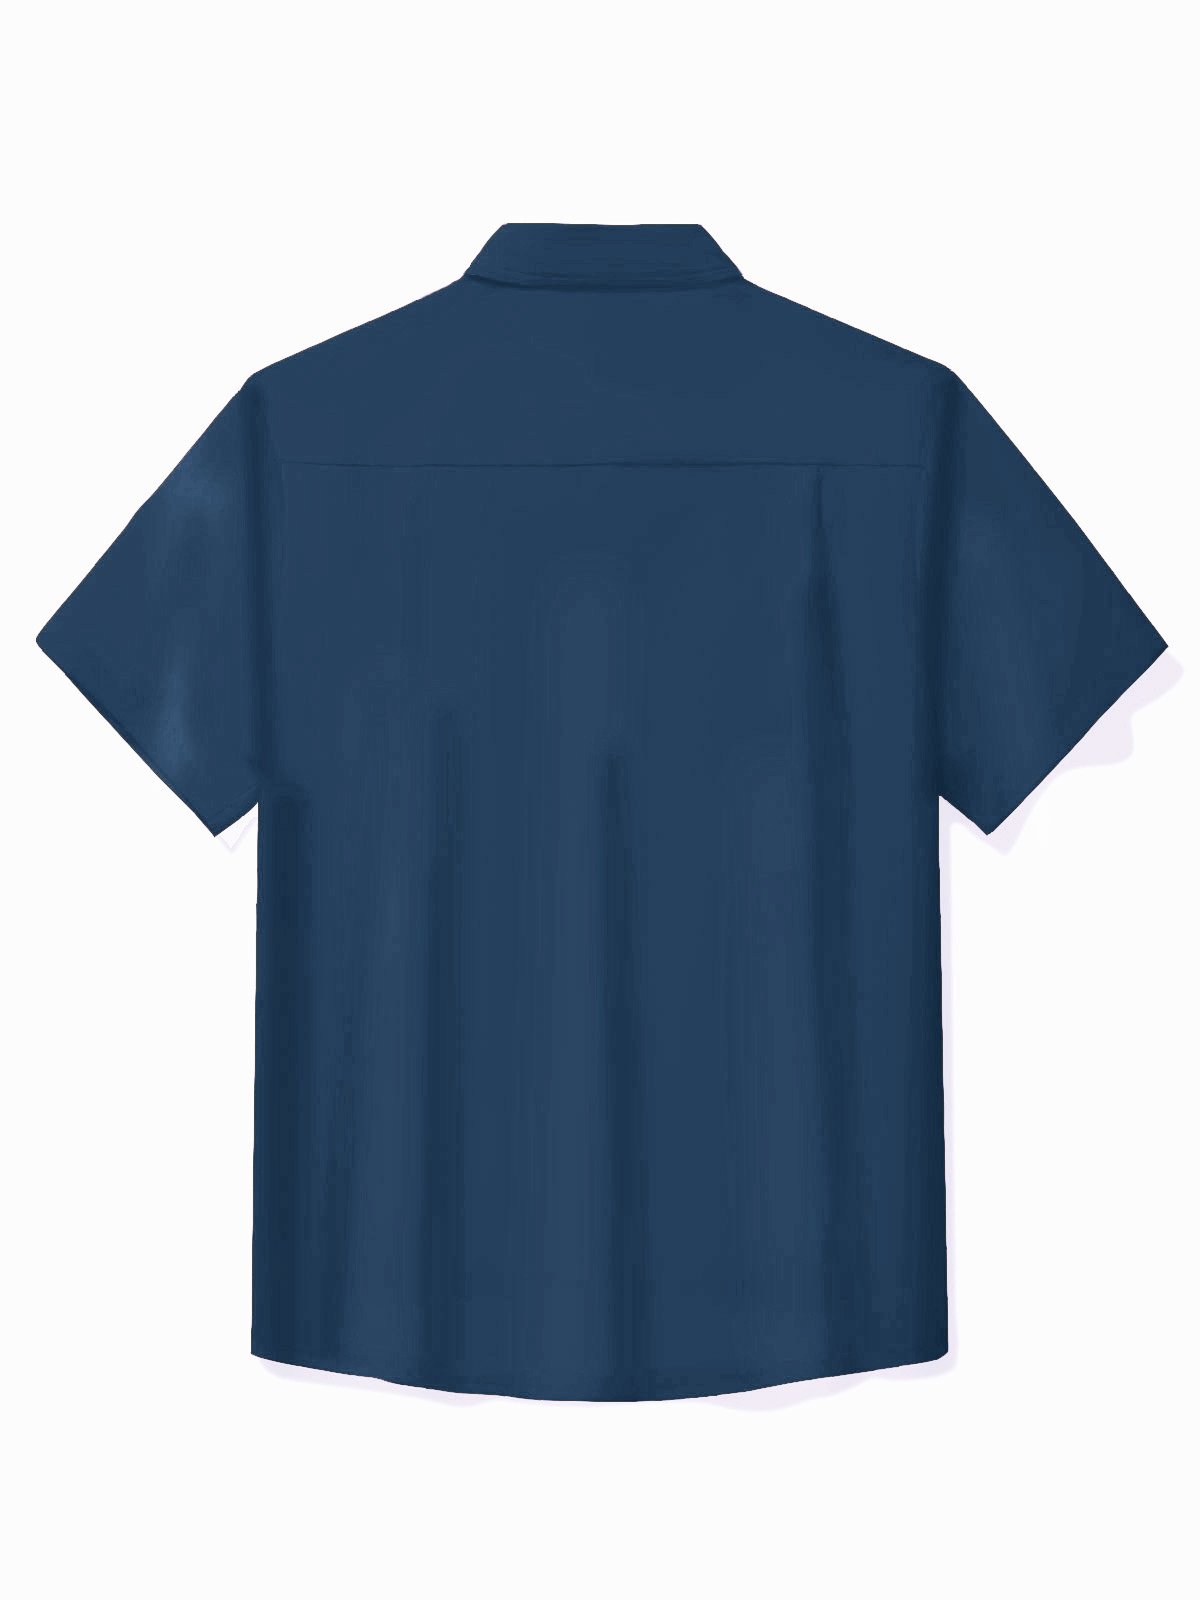 Royaura® 50's Retro Bowling Shirt Medieval Geometric Cat Art Pocket Camp Shirt Big Tall